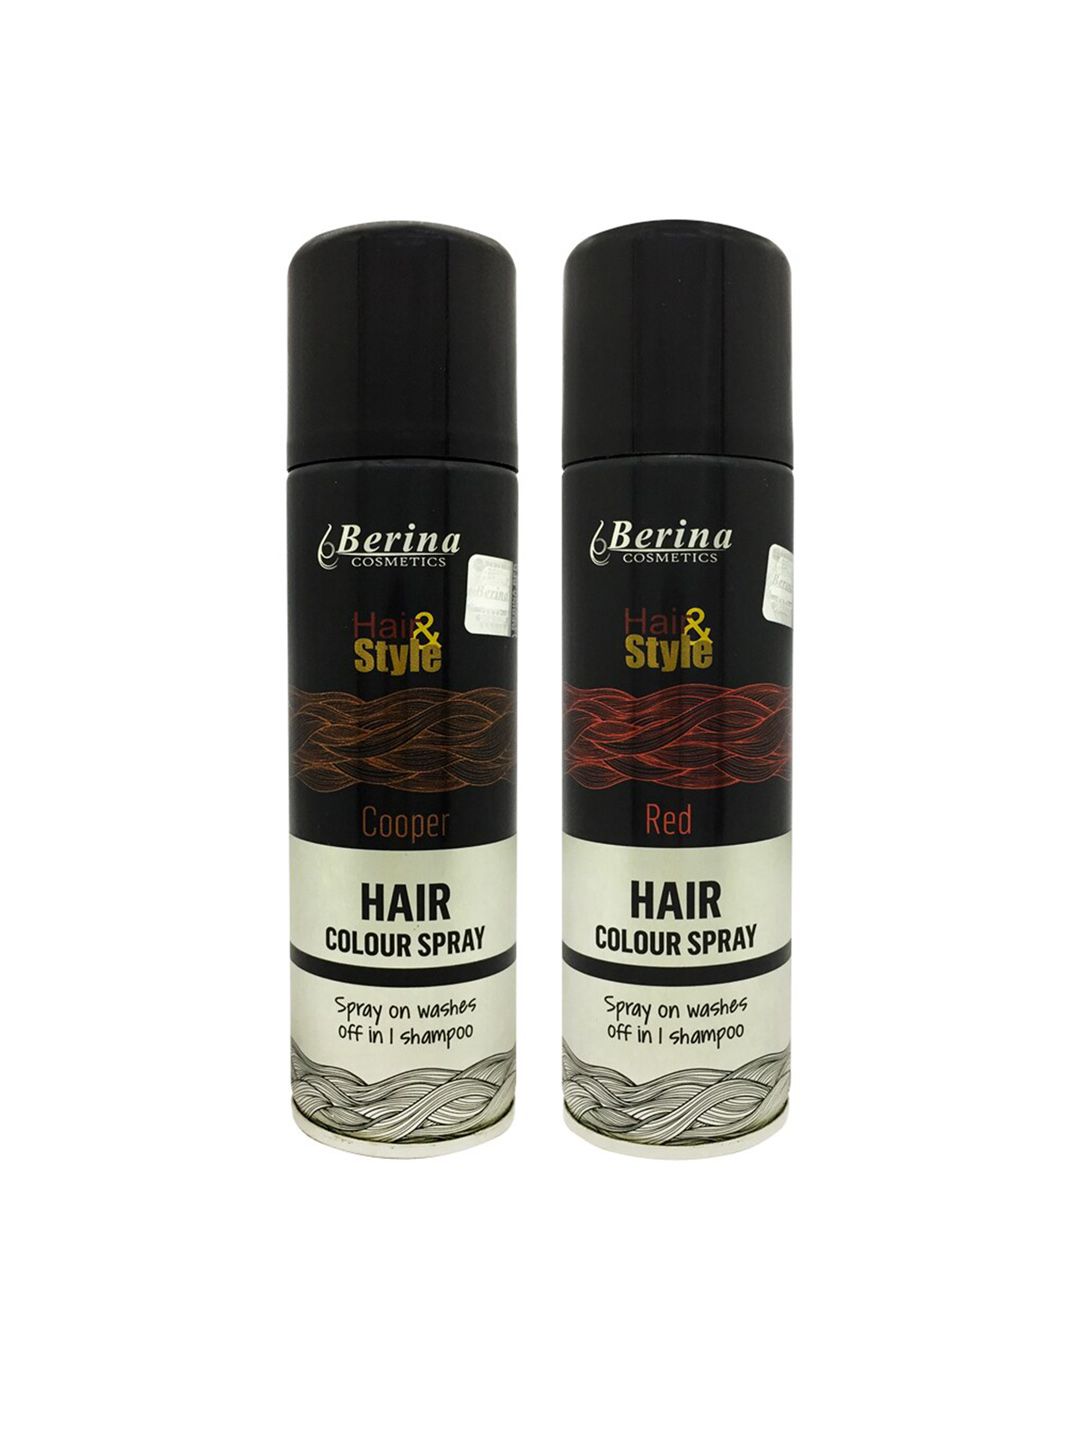 Berina Pack of 2 Hair Color Spray - Copper & Red Price in India